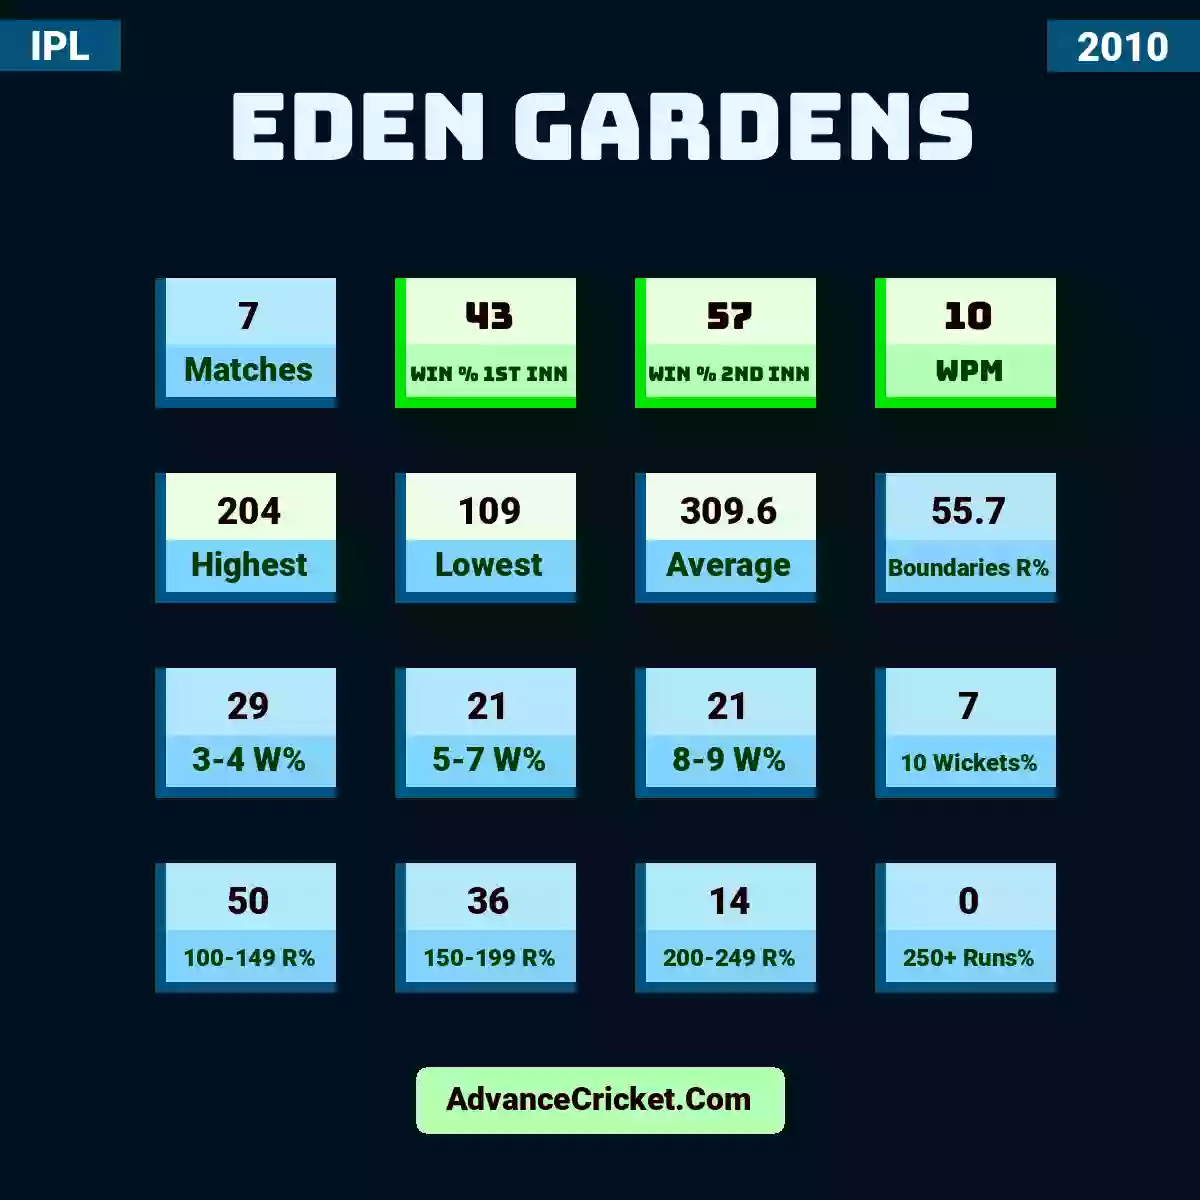 Image showing Eden Gardens with Matches: 7, Win % 1st Inn: 43, Win % 2nd Inn: 57, WPM: 10, Highest: 204, Lowest: 109, Average: 309.6, Boundaries R%: 55.7, 3-4 W%: 29, 5-7 W%: 21, 8-9 W%: 21, 10 Wickets%: 7, 100-149 R%: 50, 150-199 R%: 36, 200-249 R%: 14, 250+ Runs%: 0.